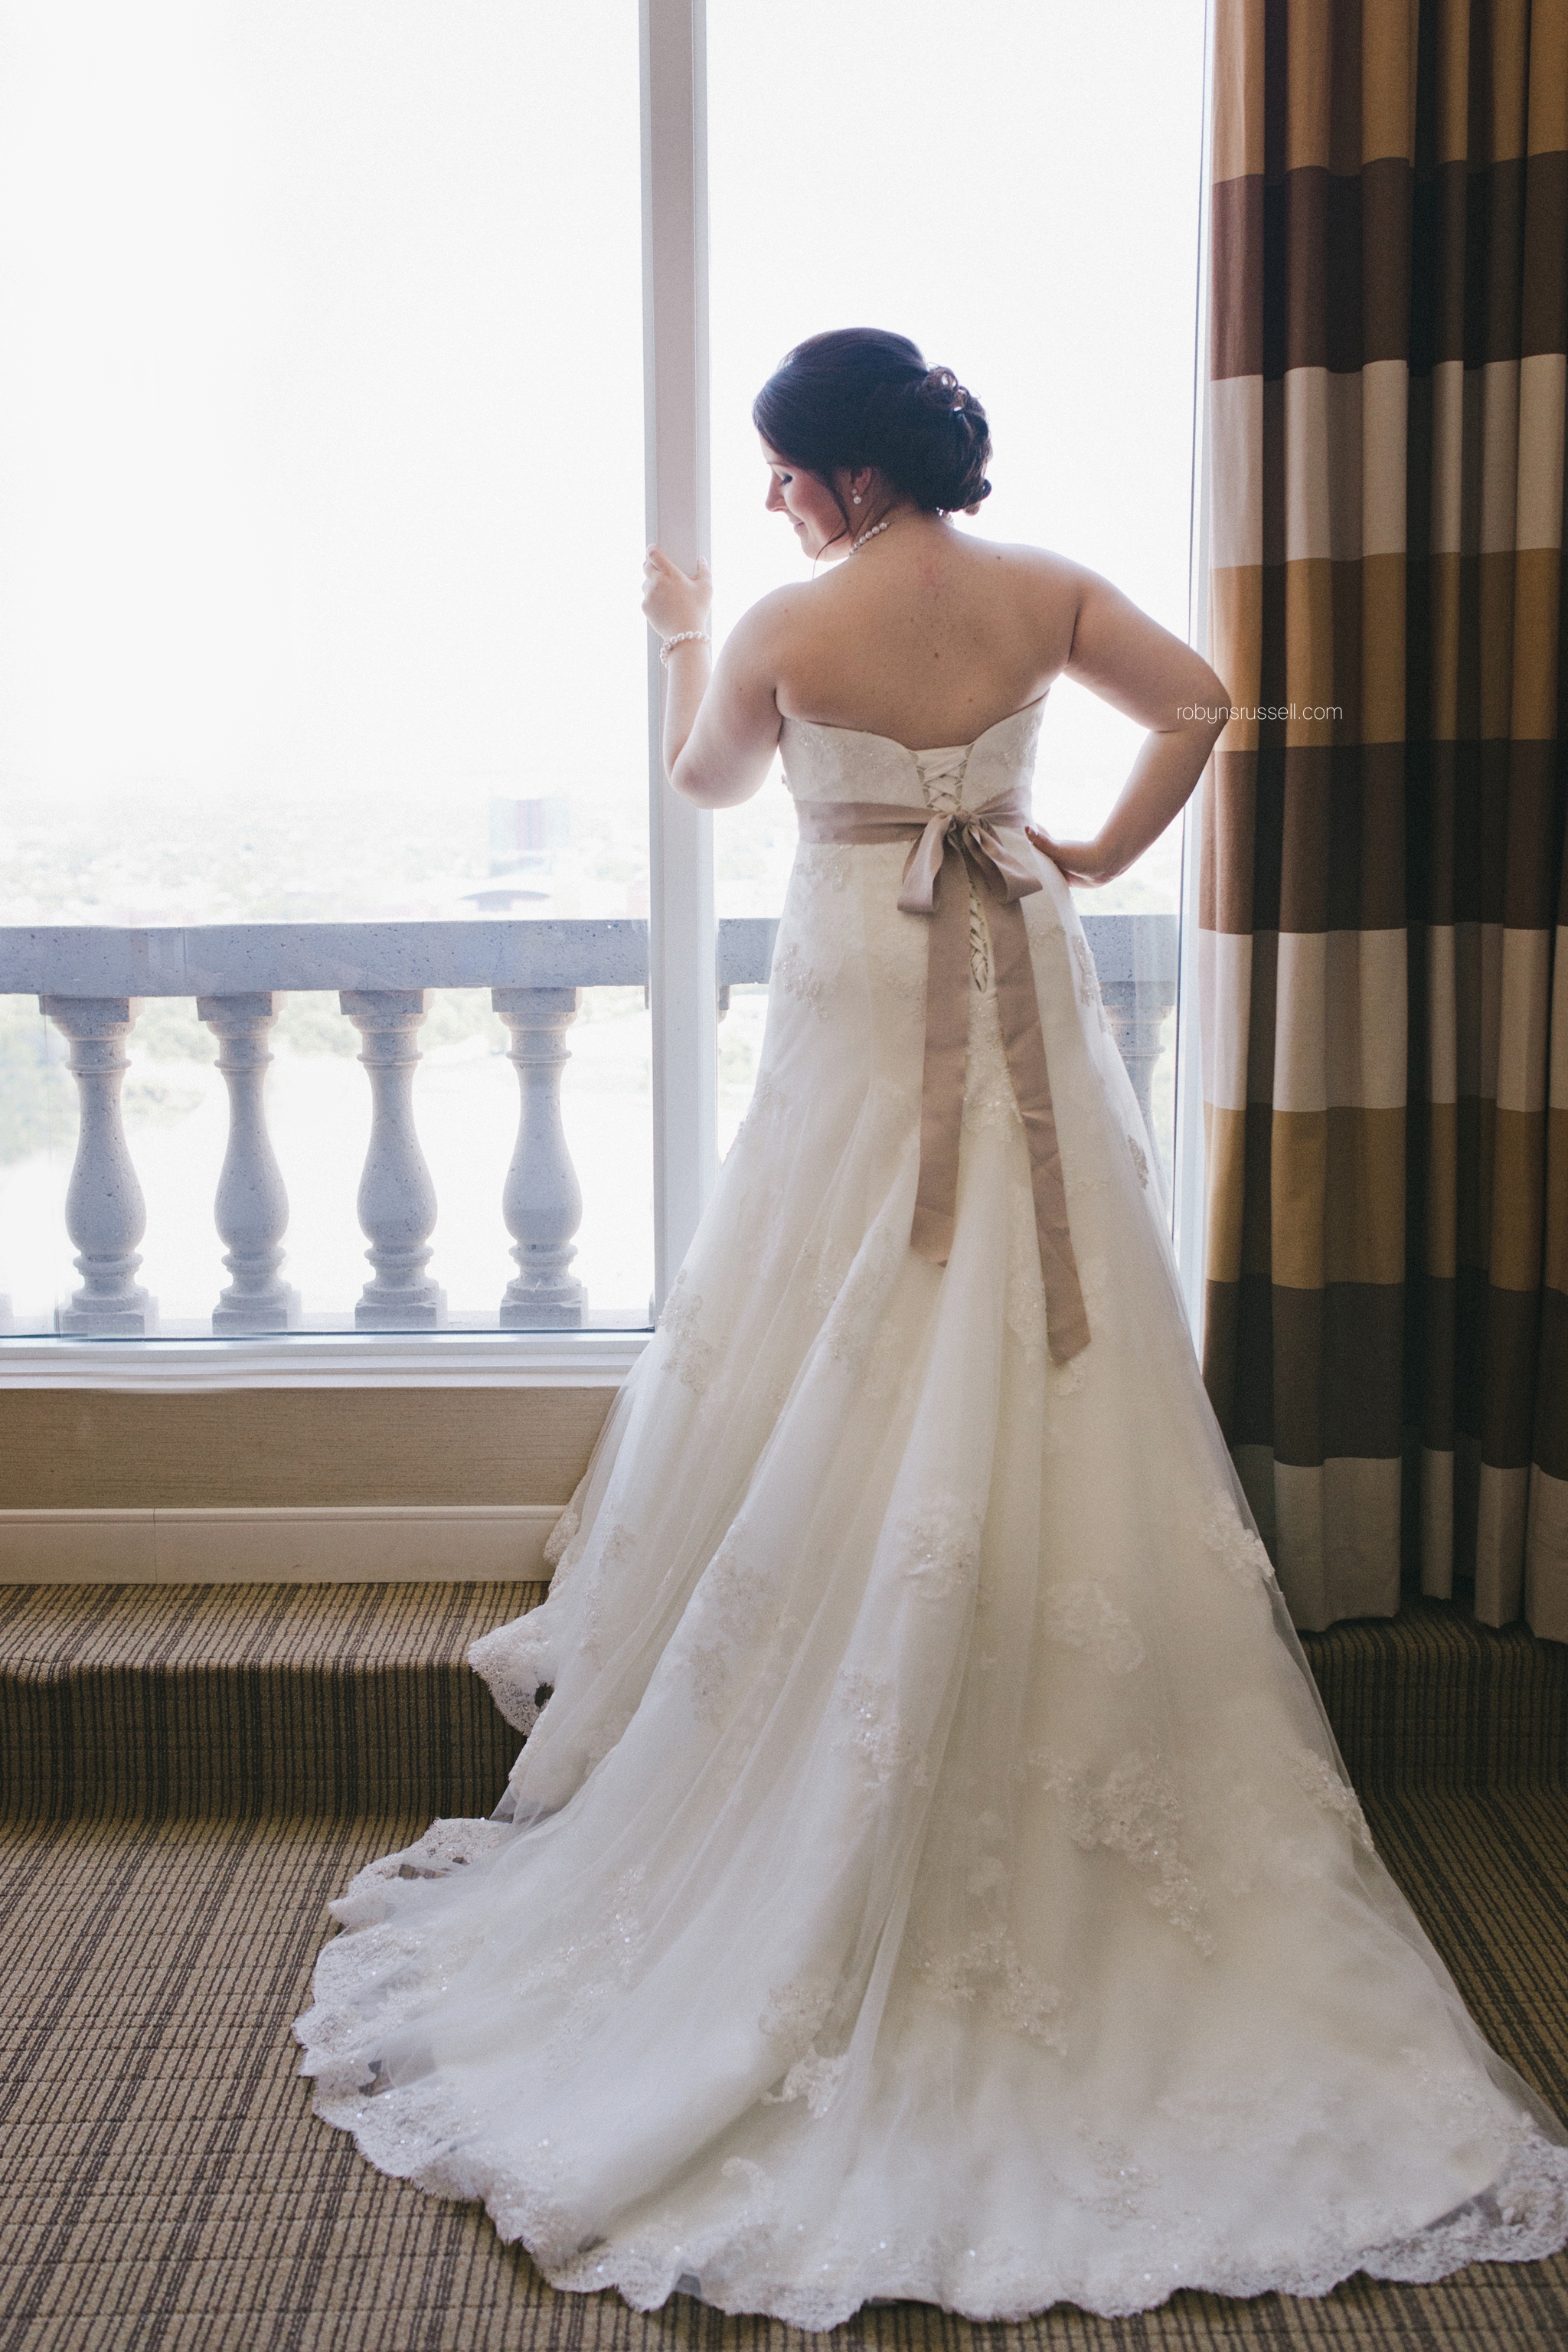 11-stunning-back-of-brides-wedding-dress.jpg